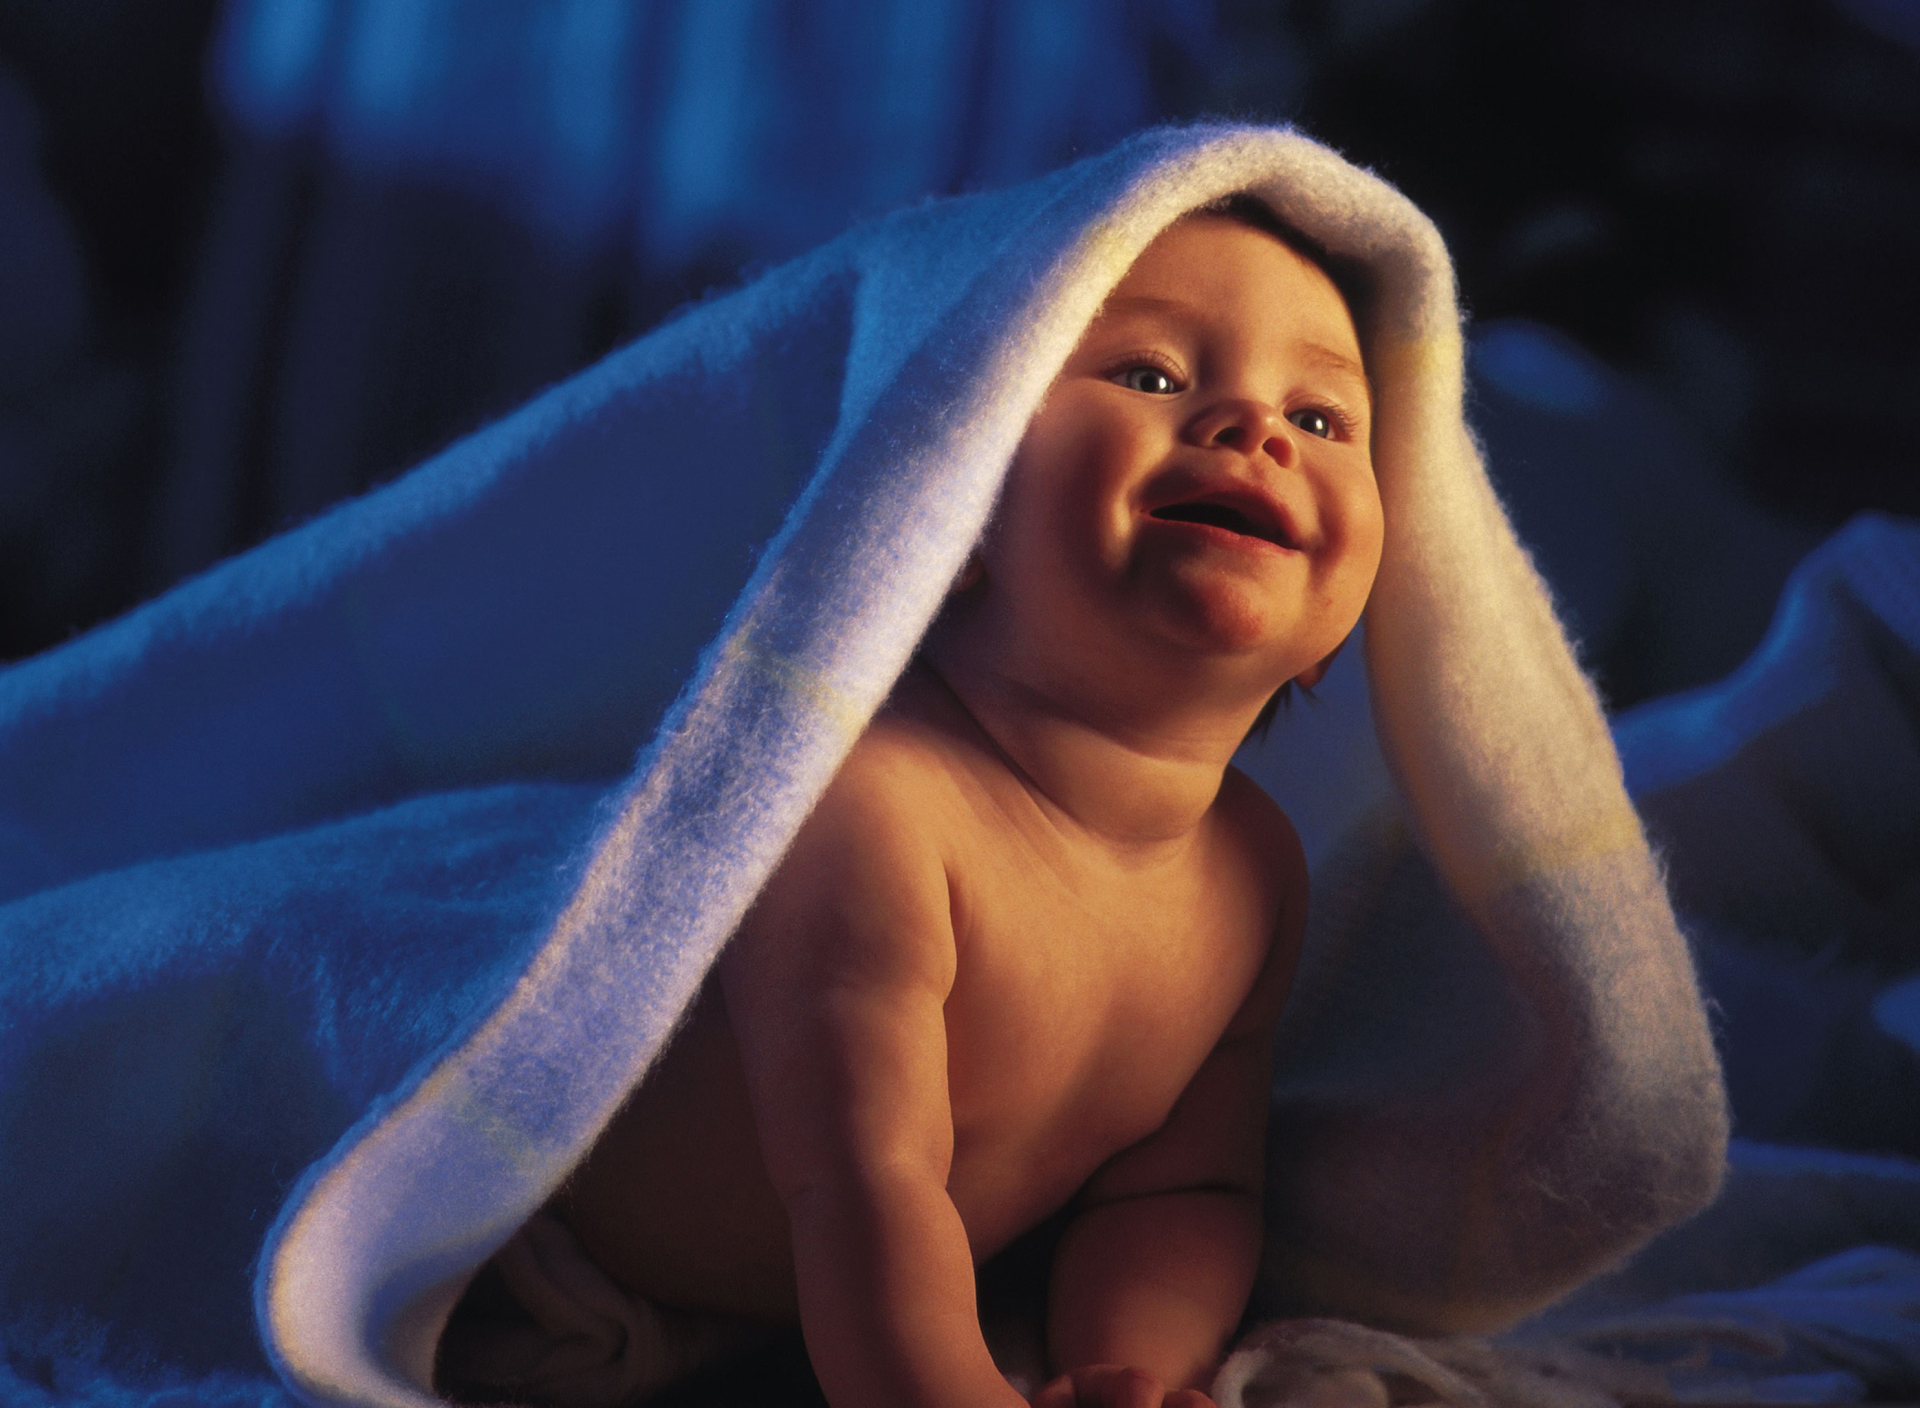 Smiling Baby wallpaper 1920x1408